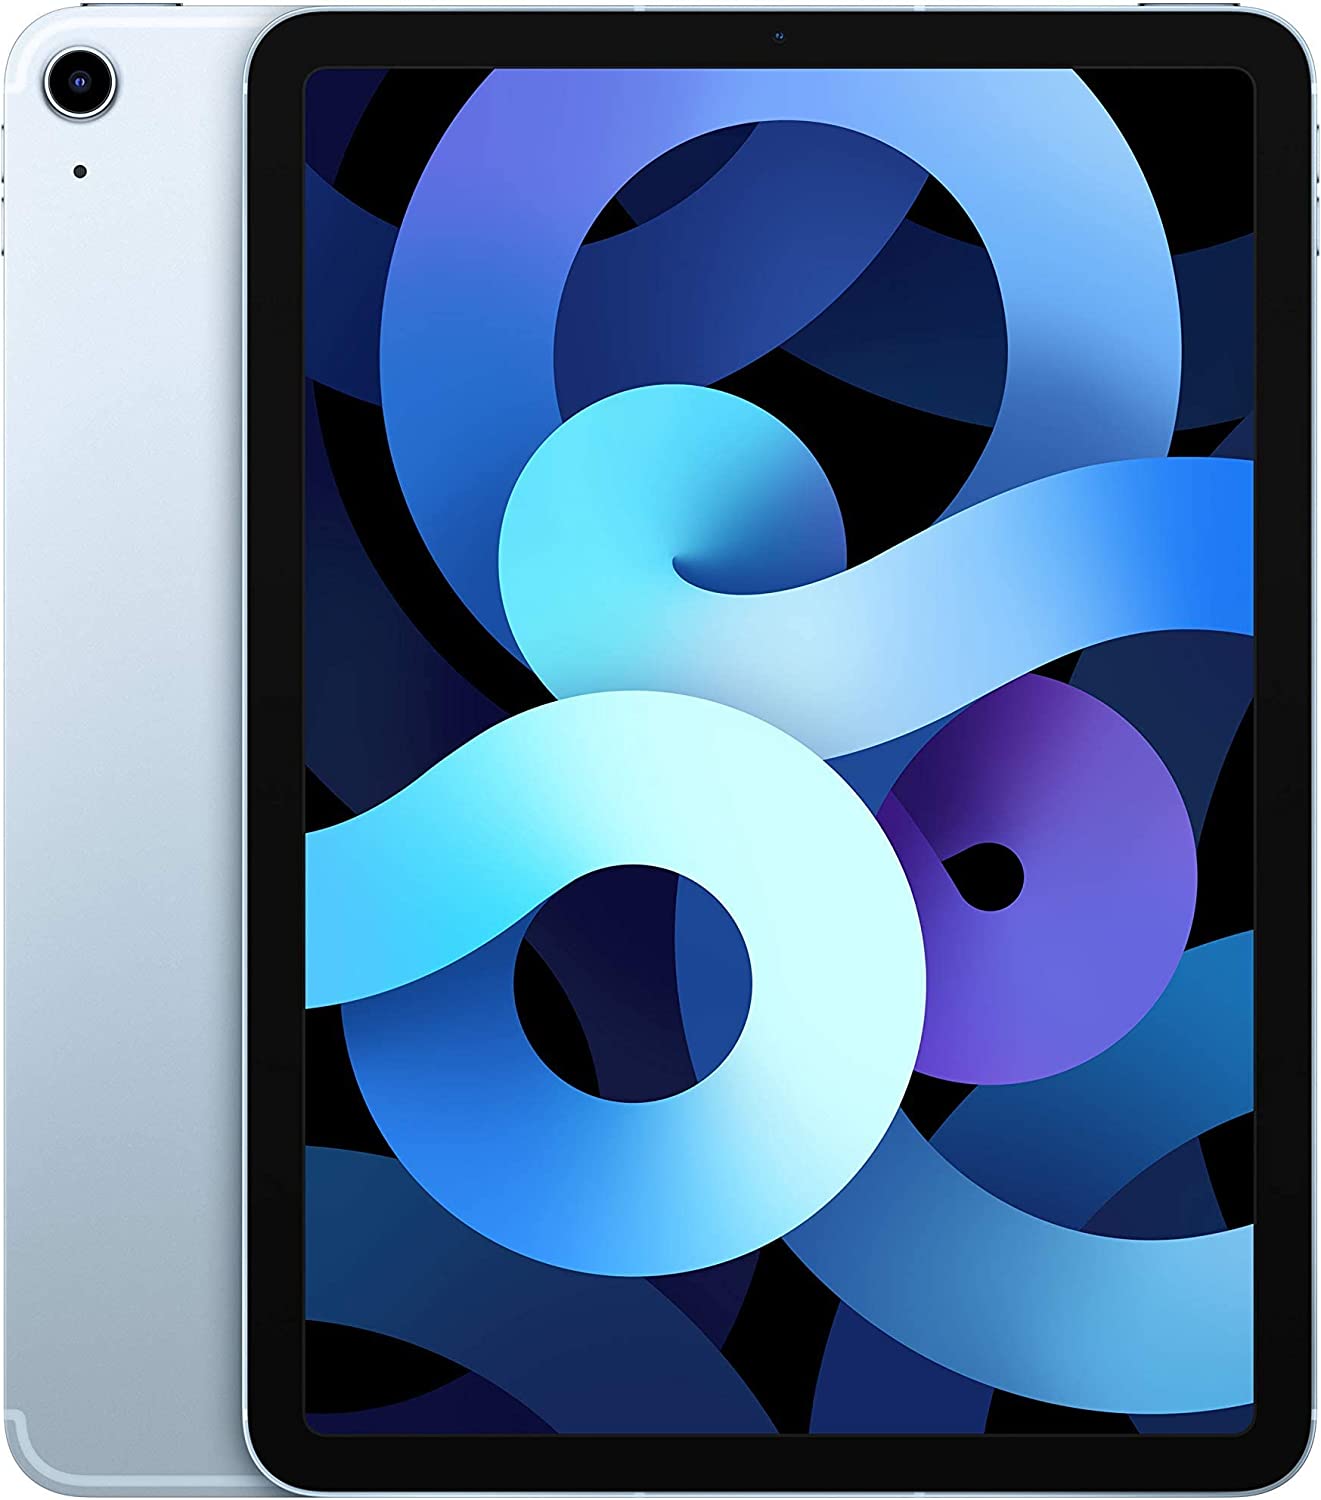 Apple iPad Air 4th Gen 64GB Wifi + Cellular (Unlocked) - Sky Blue (Refurbished)